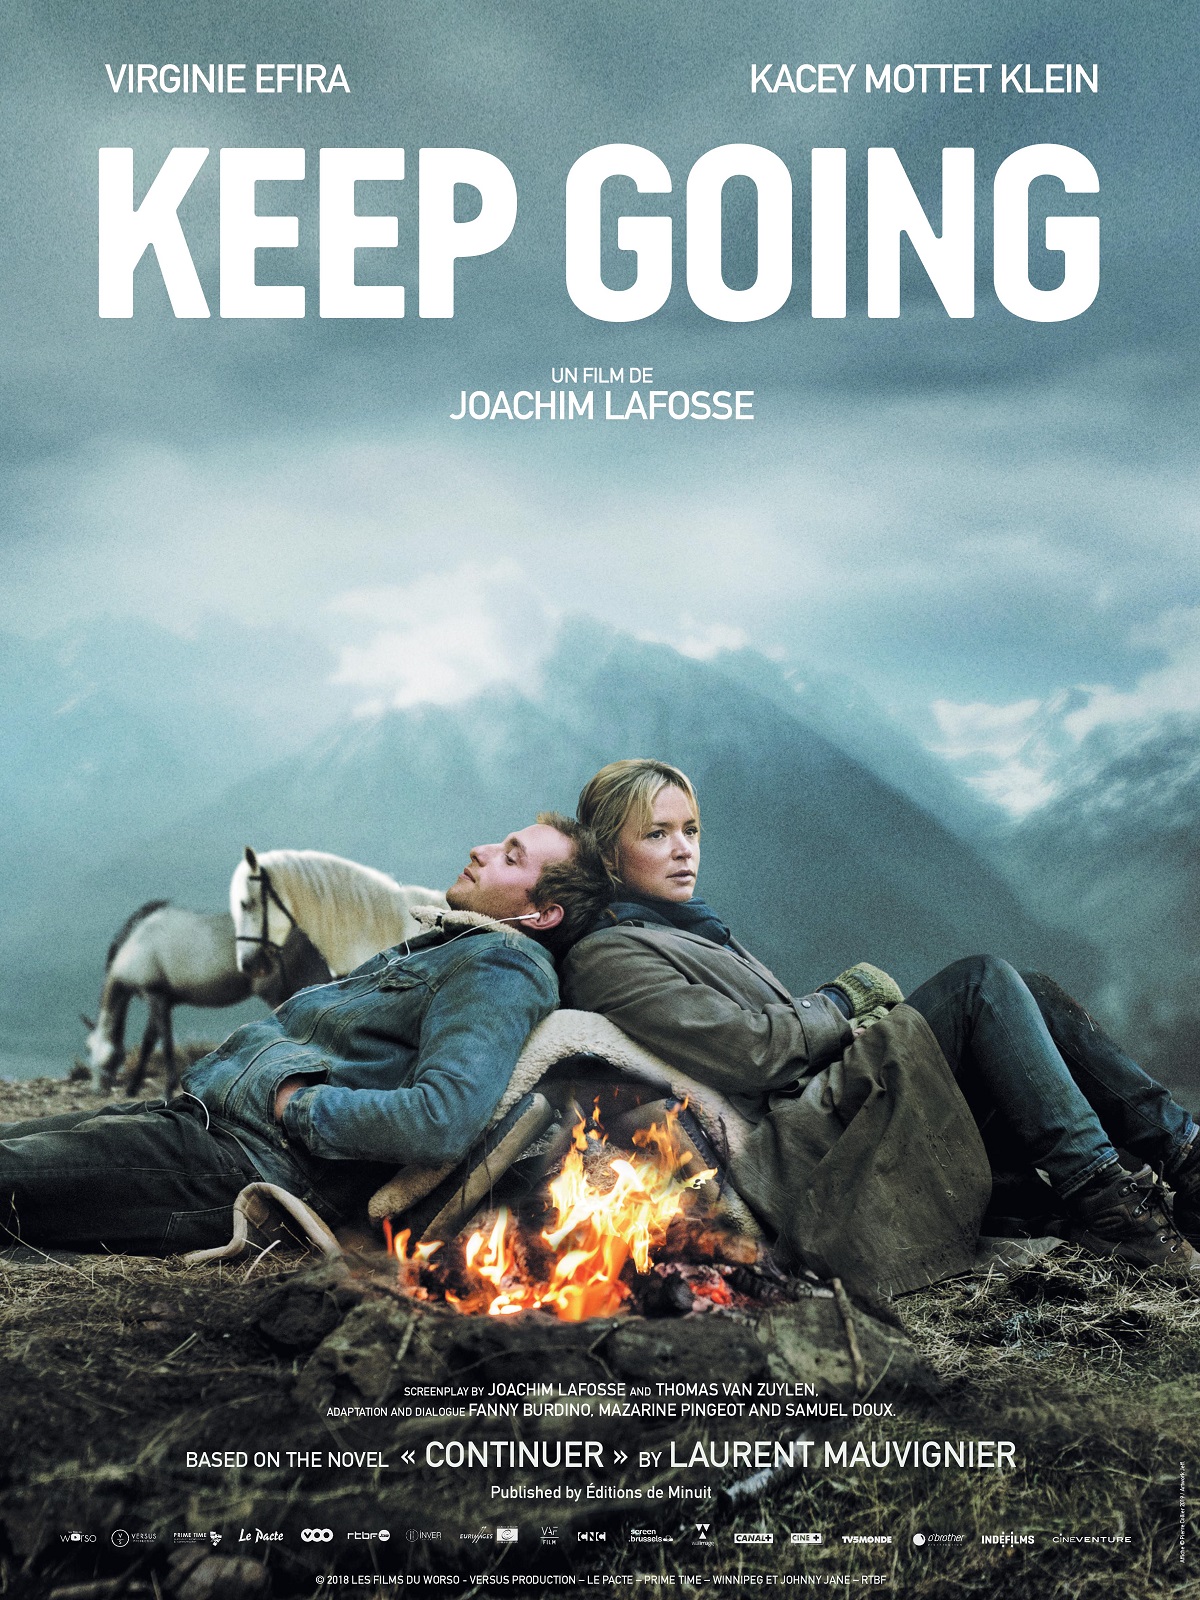 Nonton film Keep Going layarkaca21 indoxx1 ganool online streaming terbaru